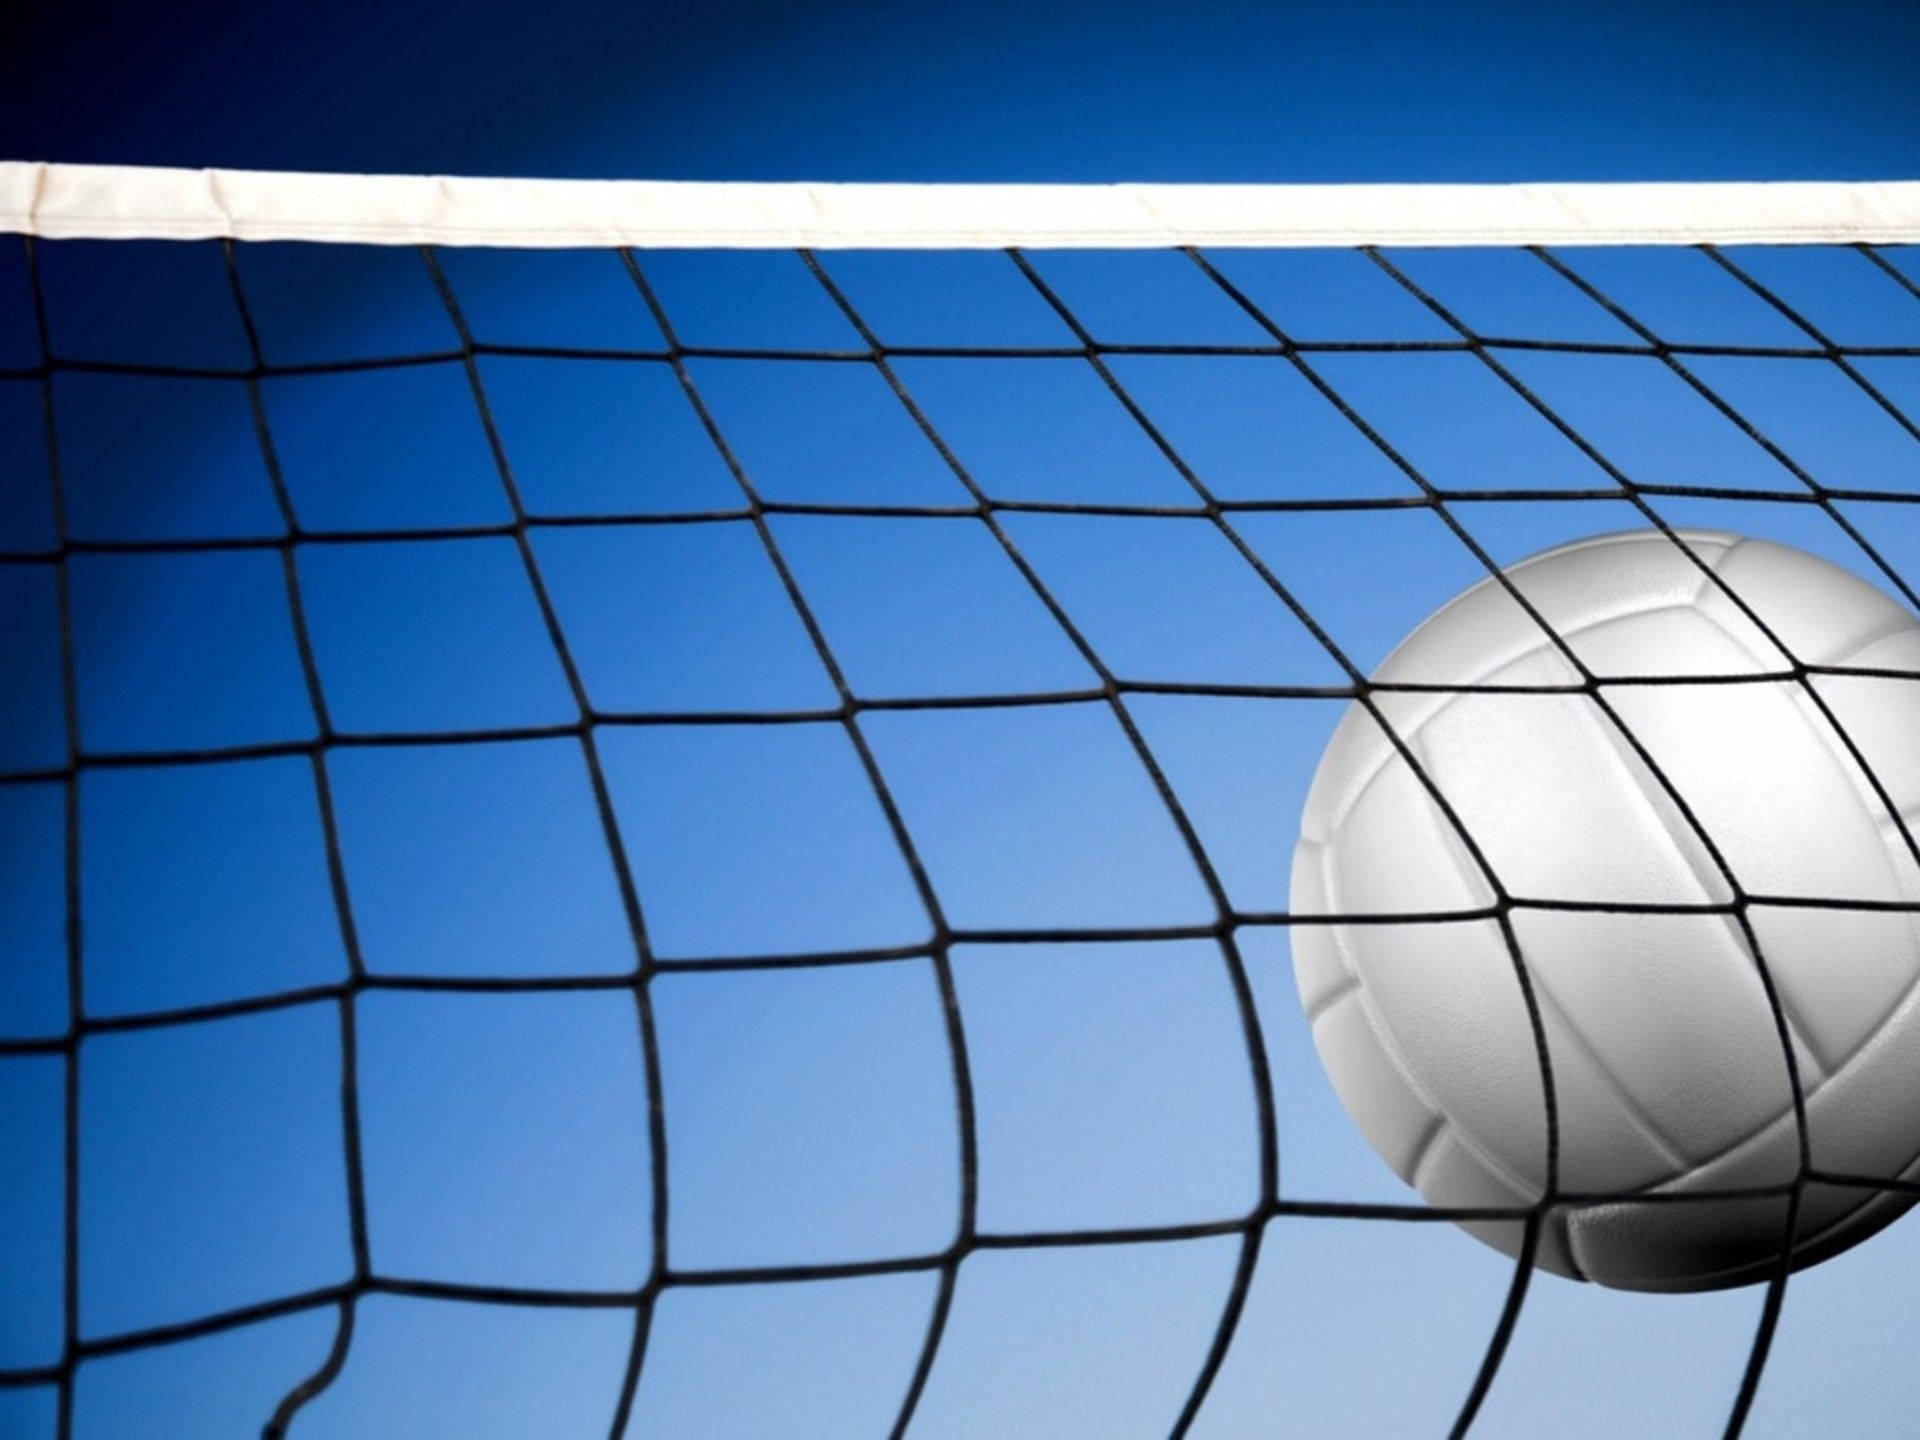 Volleyball Spiked Ball On Net Wallpaper